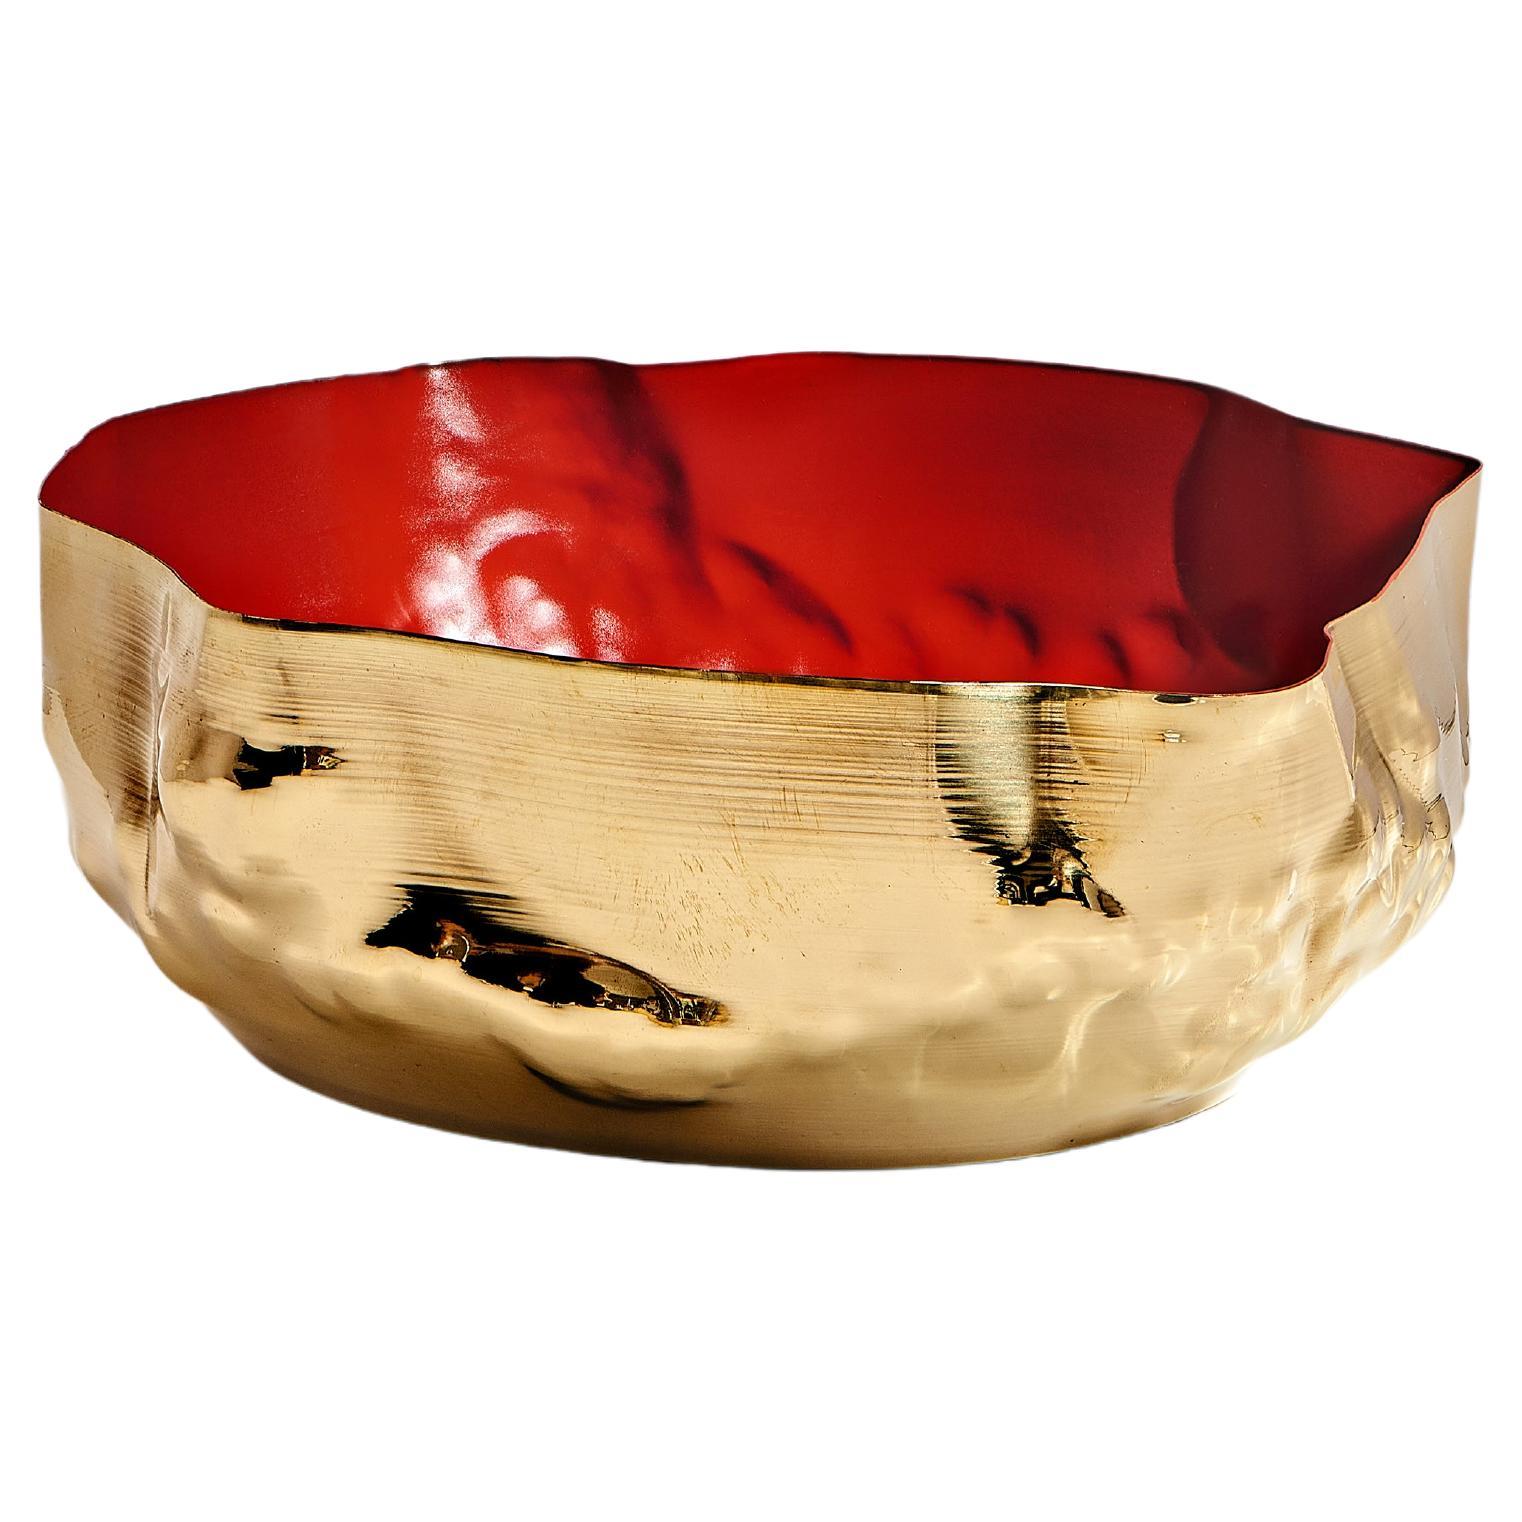 Momento Handmade Colourful Bowl by Jordan Keaney - Brass